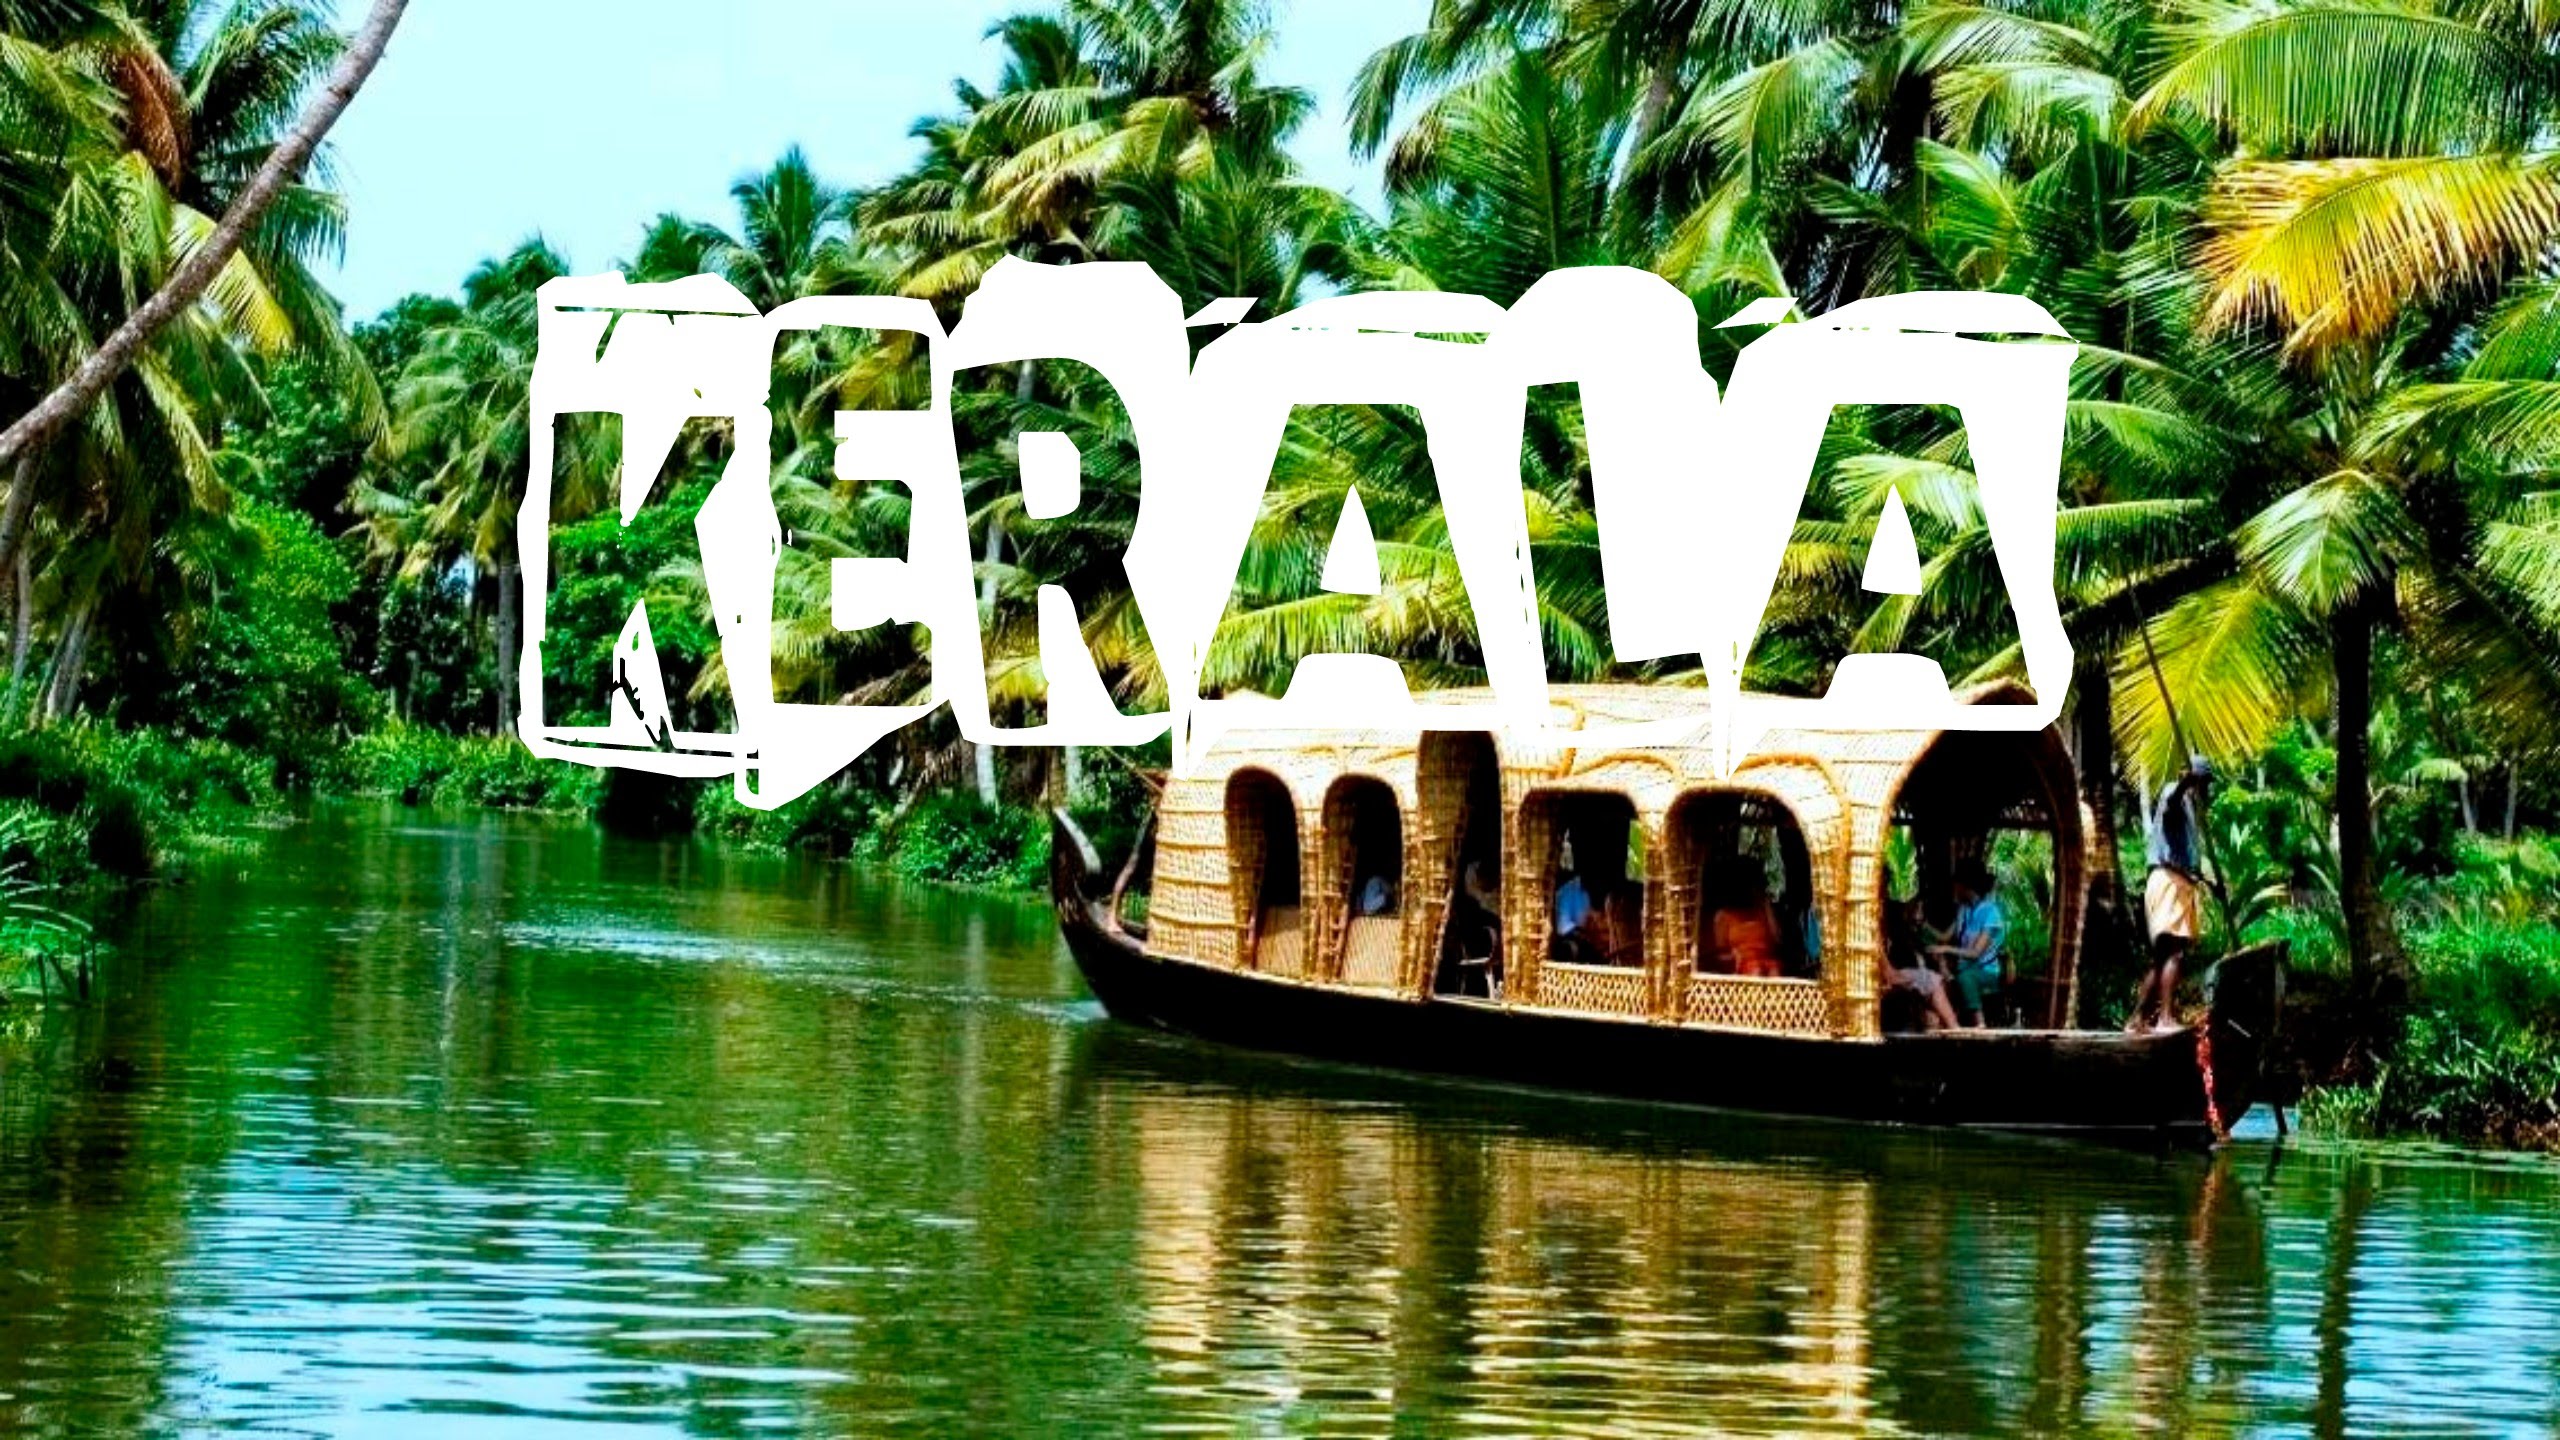 the culture trip kerala